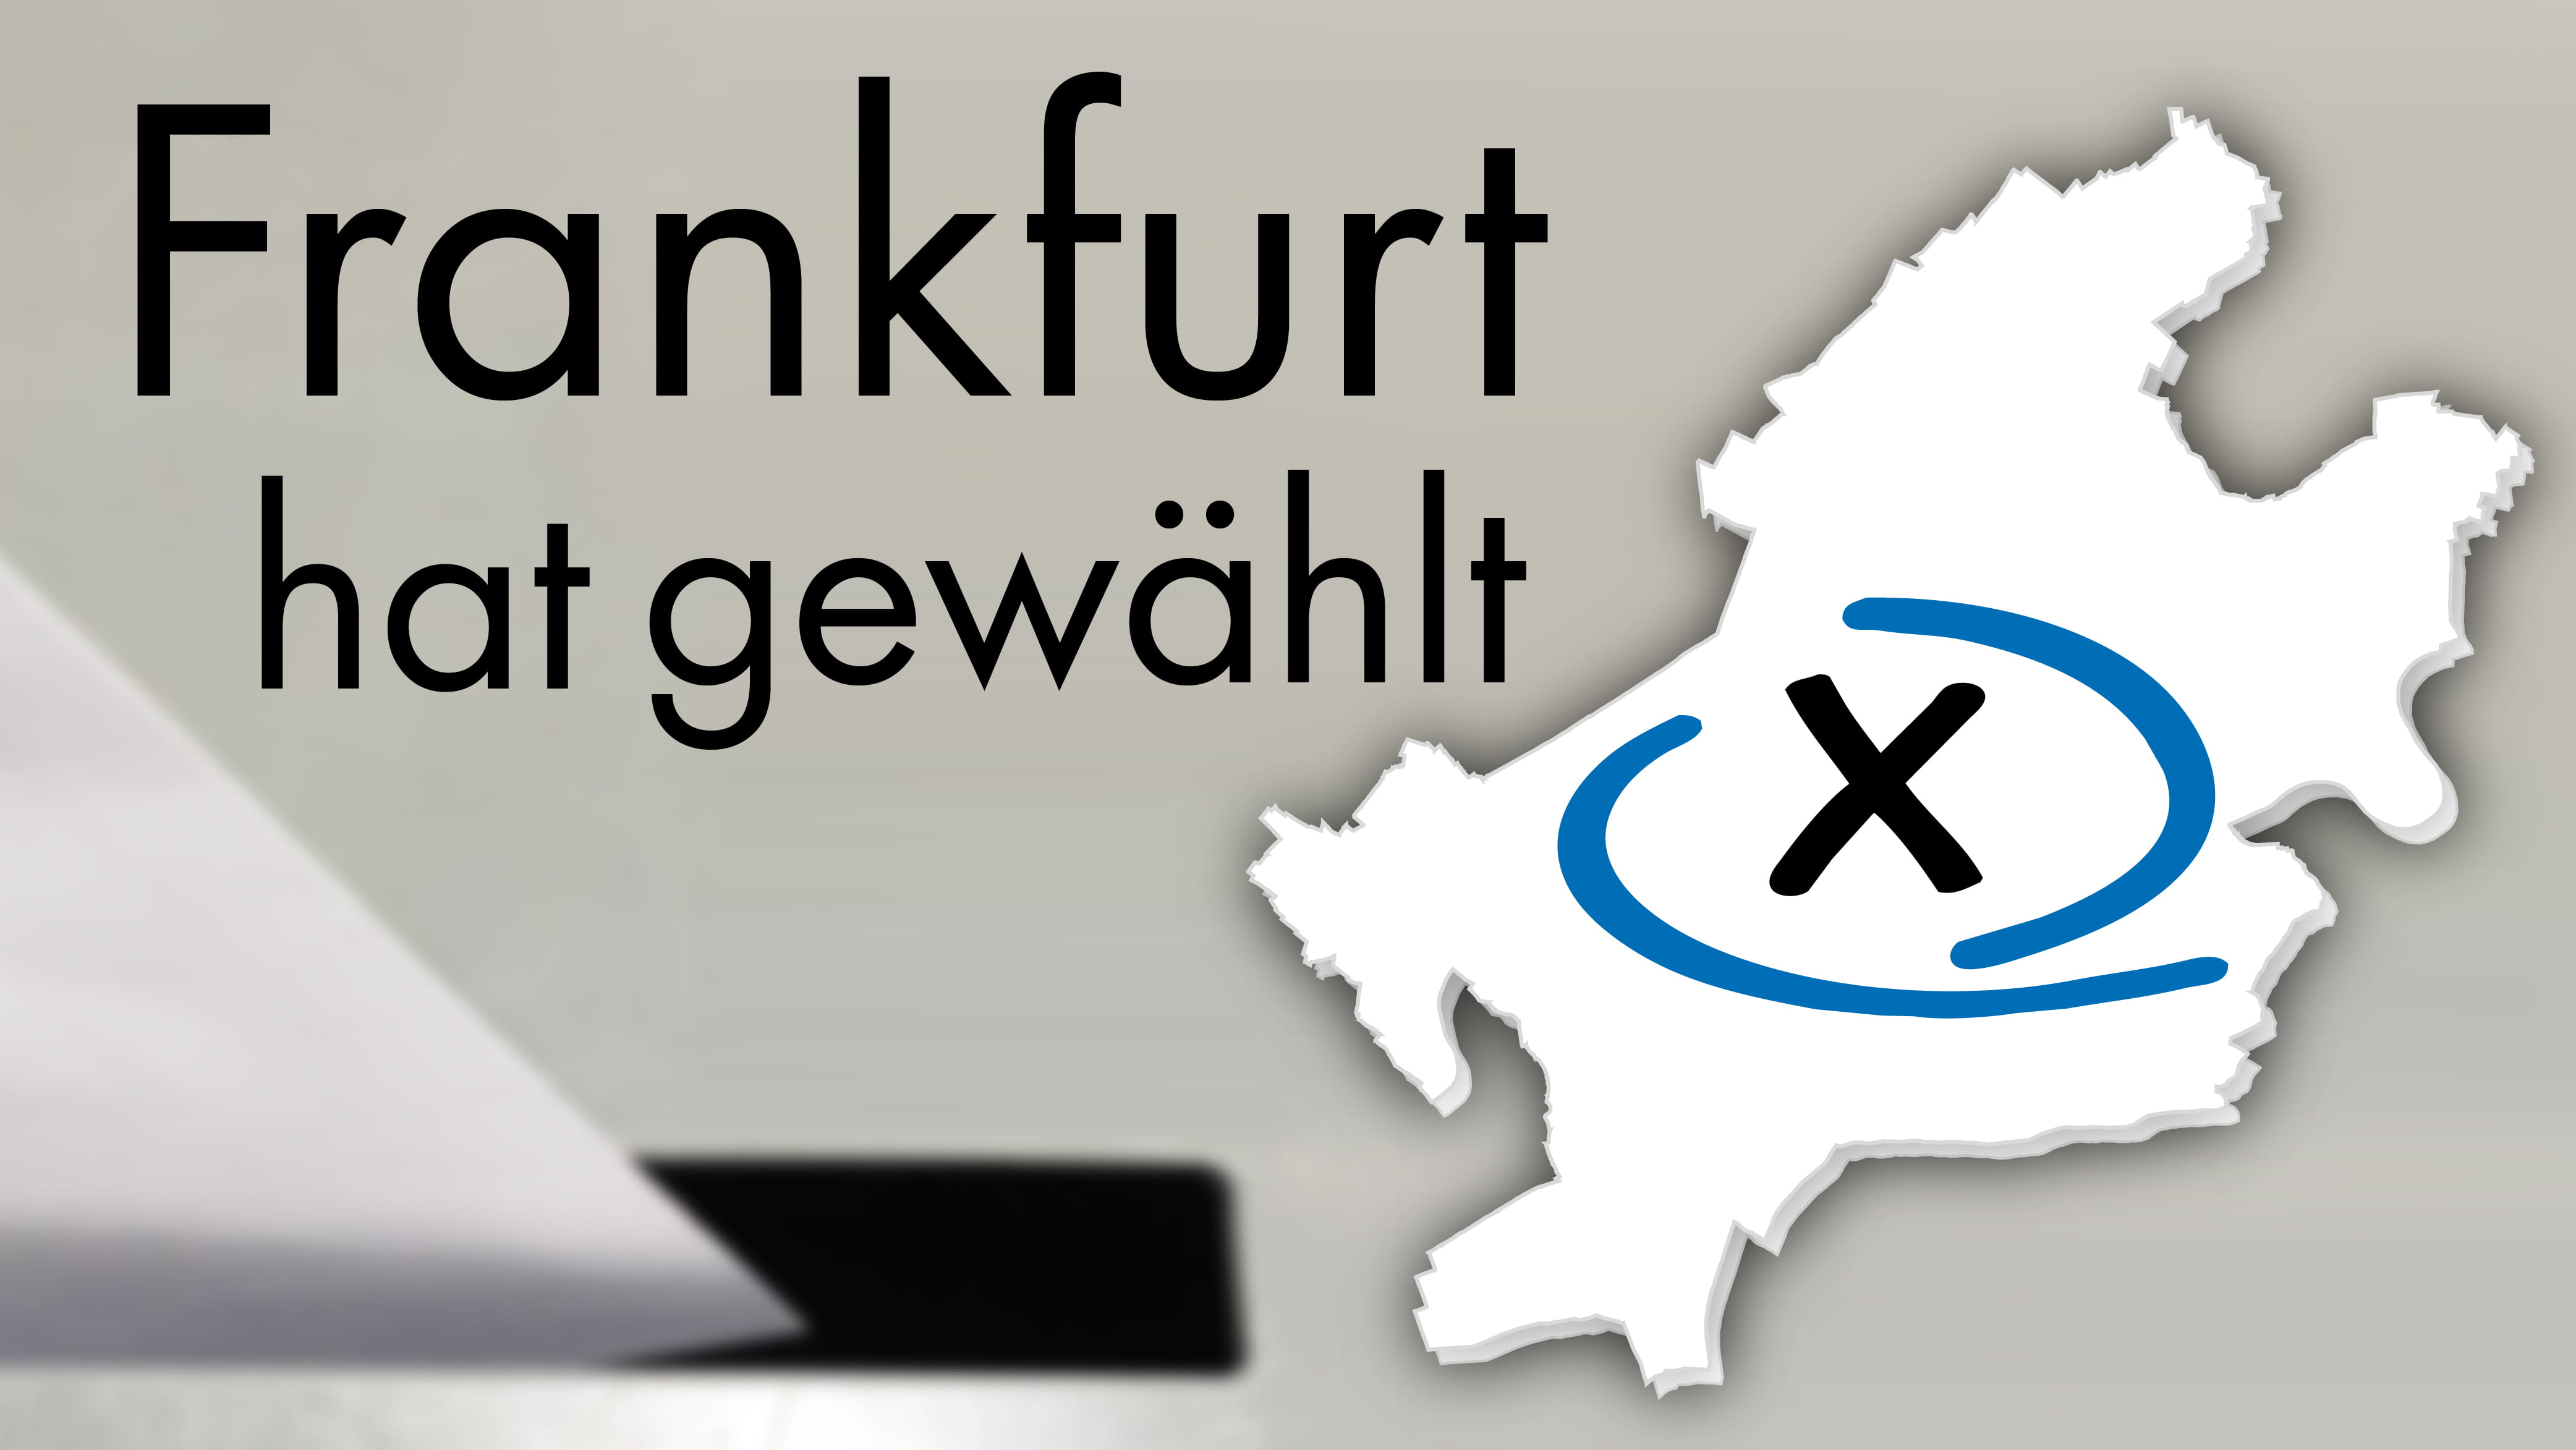 Frankfurt hat gewählt